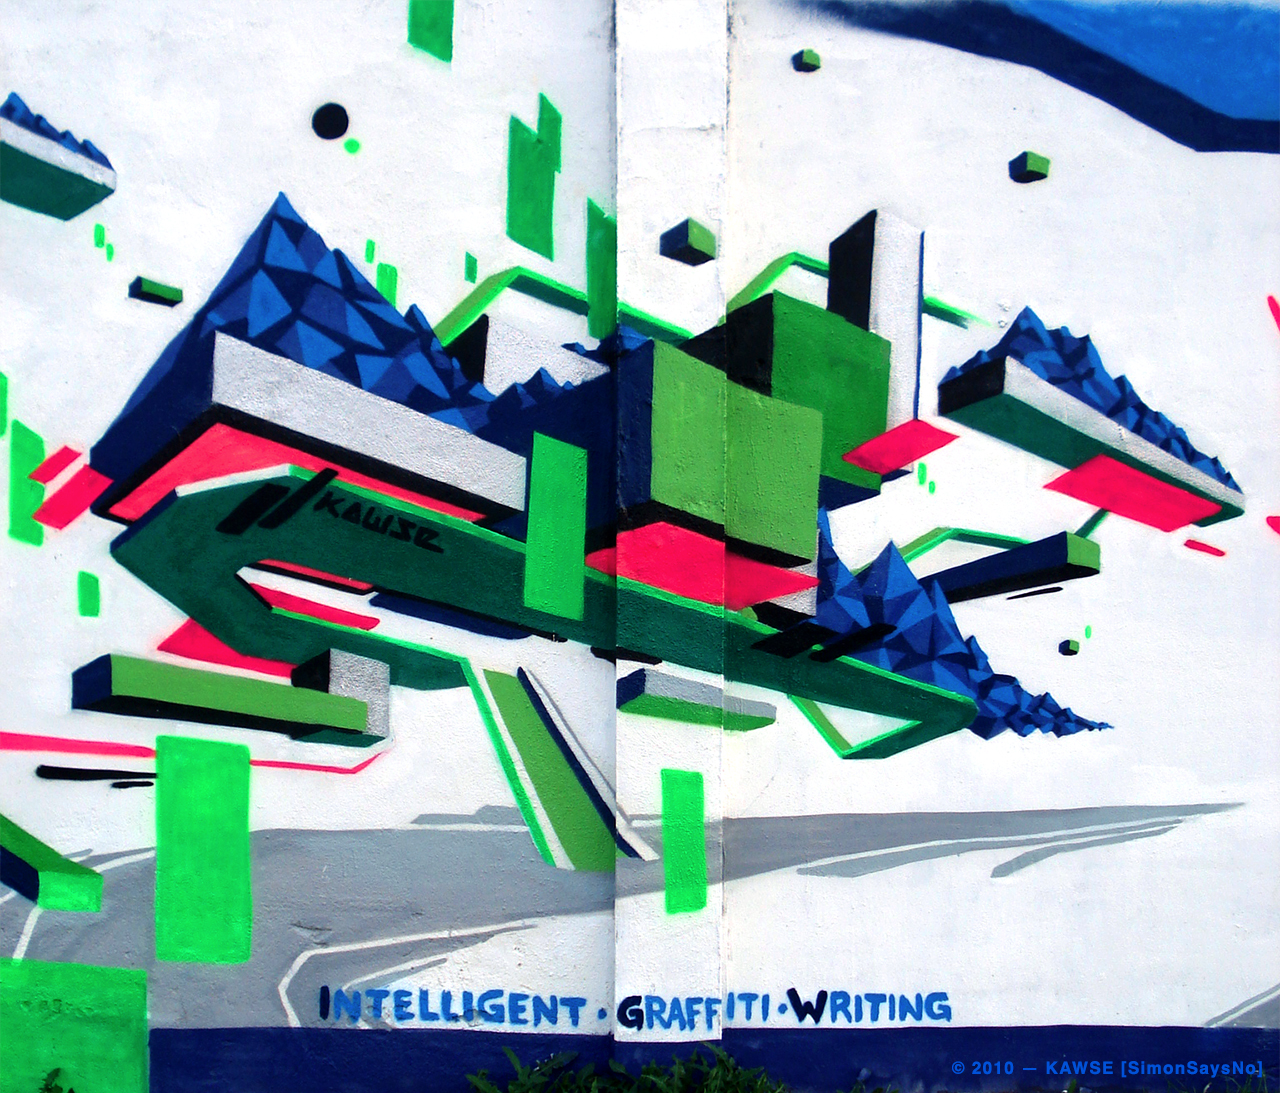 KAWSE 2010 – INTELLIGENT GRAFFITI WRITING [Illustration]